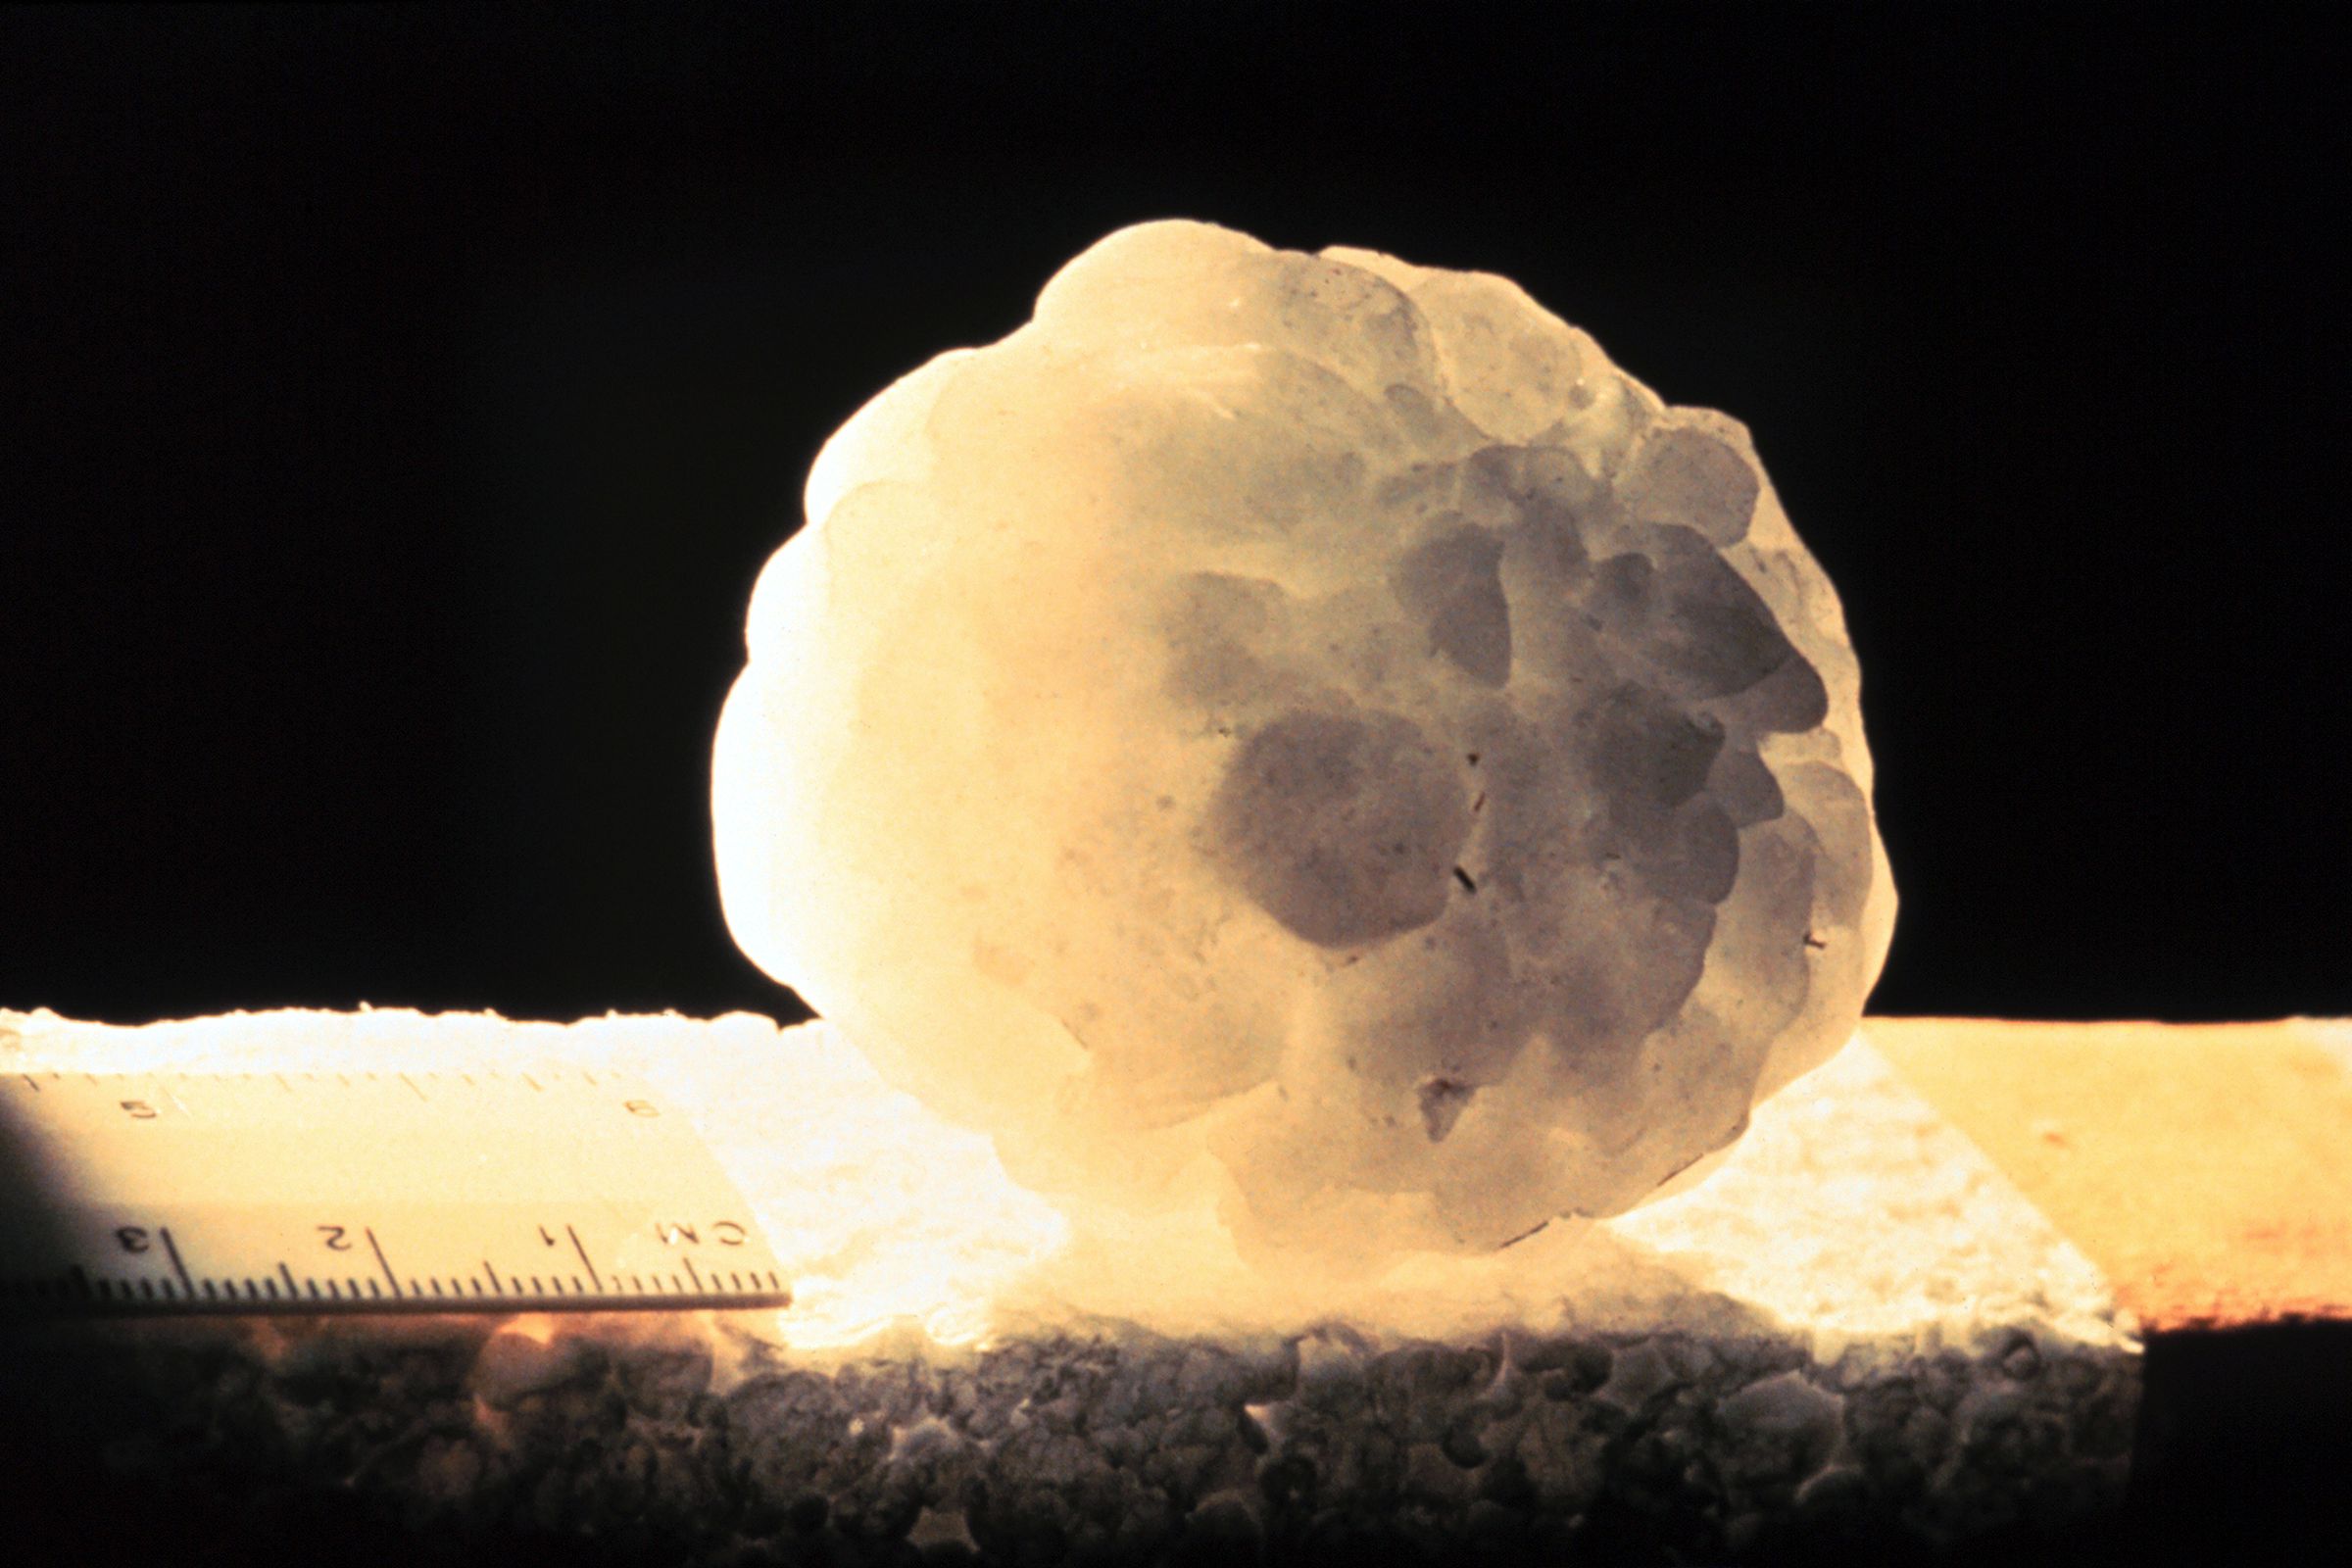 A hailstone 2.3 inches in diameter